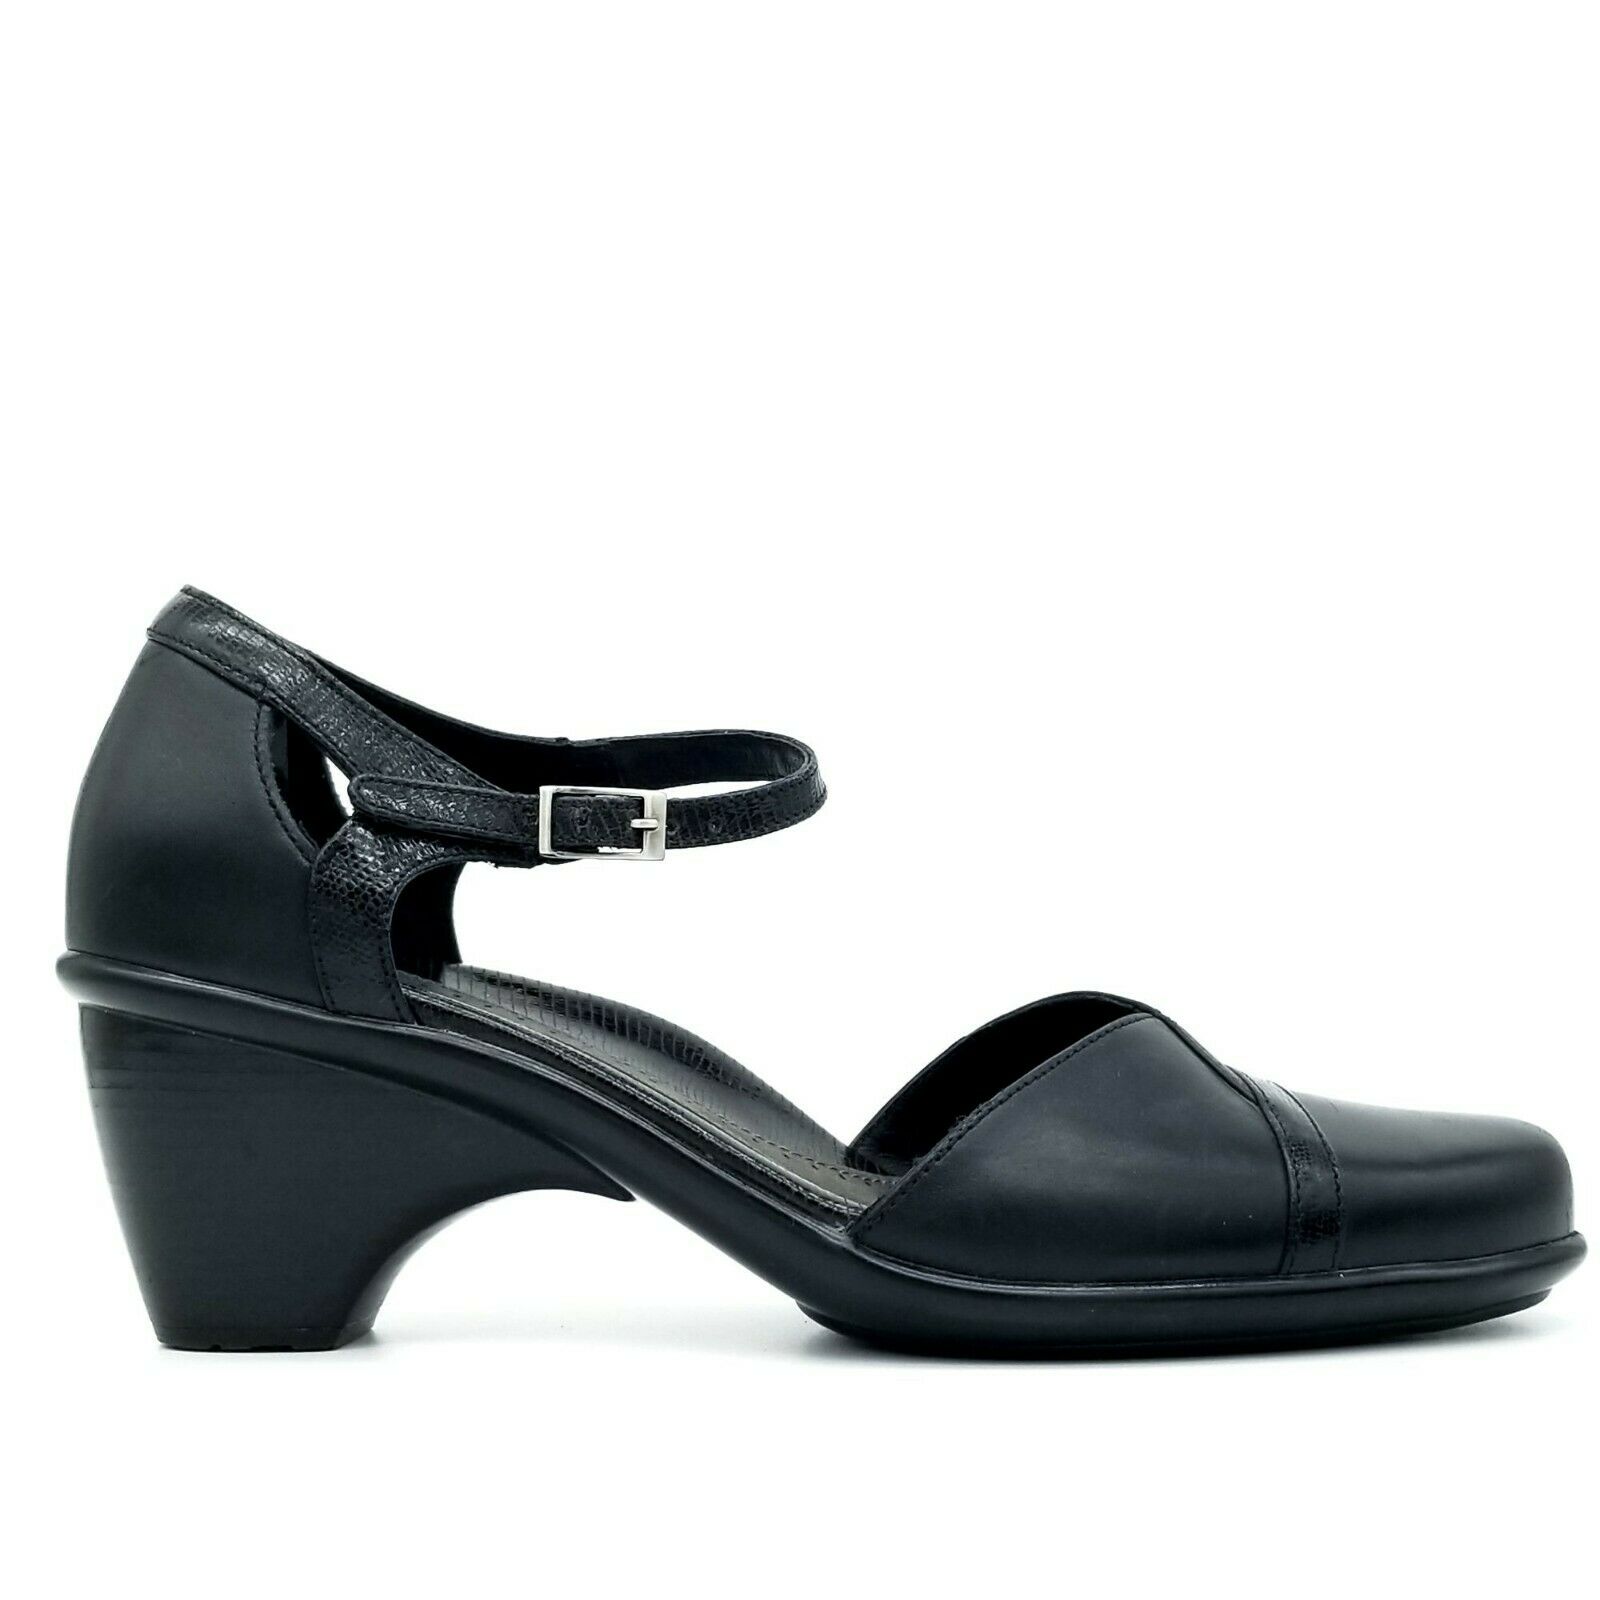 DANSKO Roxy Black Leather Clog Pump Mary Jane Shoe Womens size 42 US 10-10.5 EUC